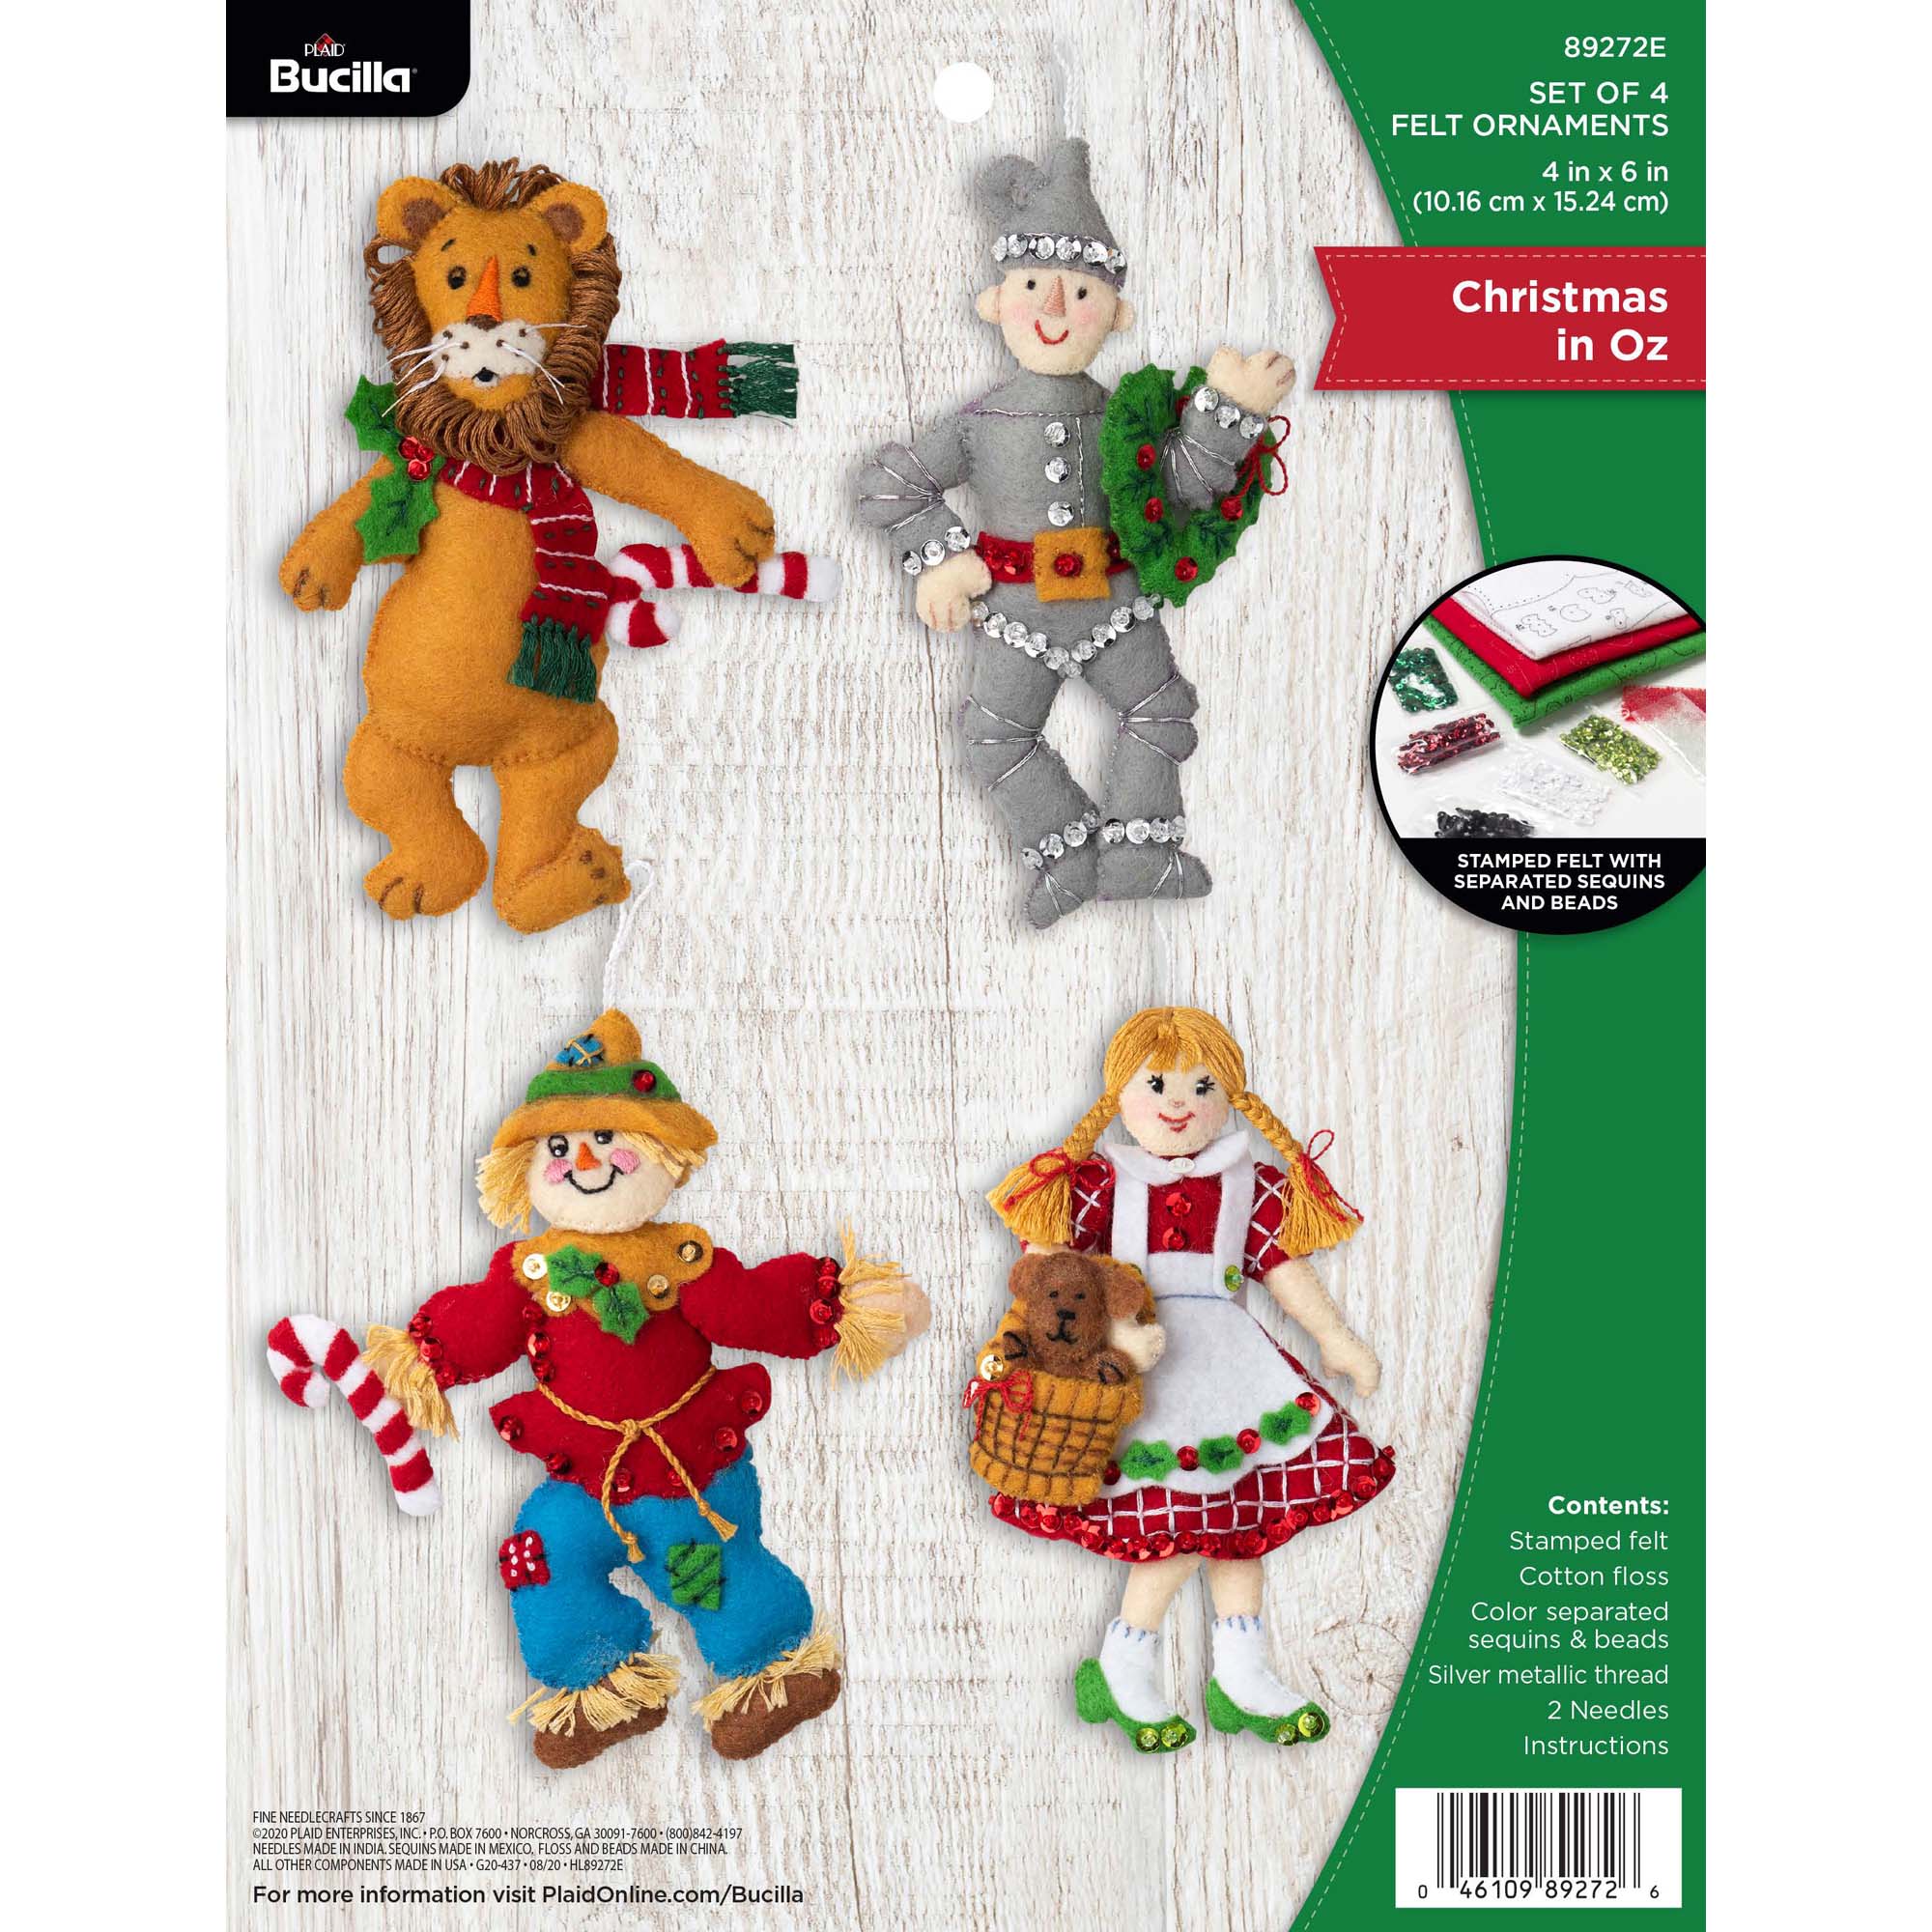 Bucilla Christmas Needlepoint Ornament Kit Wizard of Oz Kit No.60531 NOS 